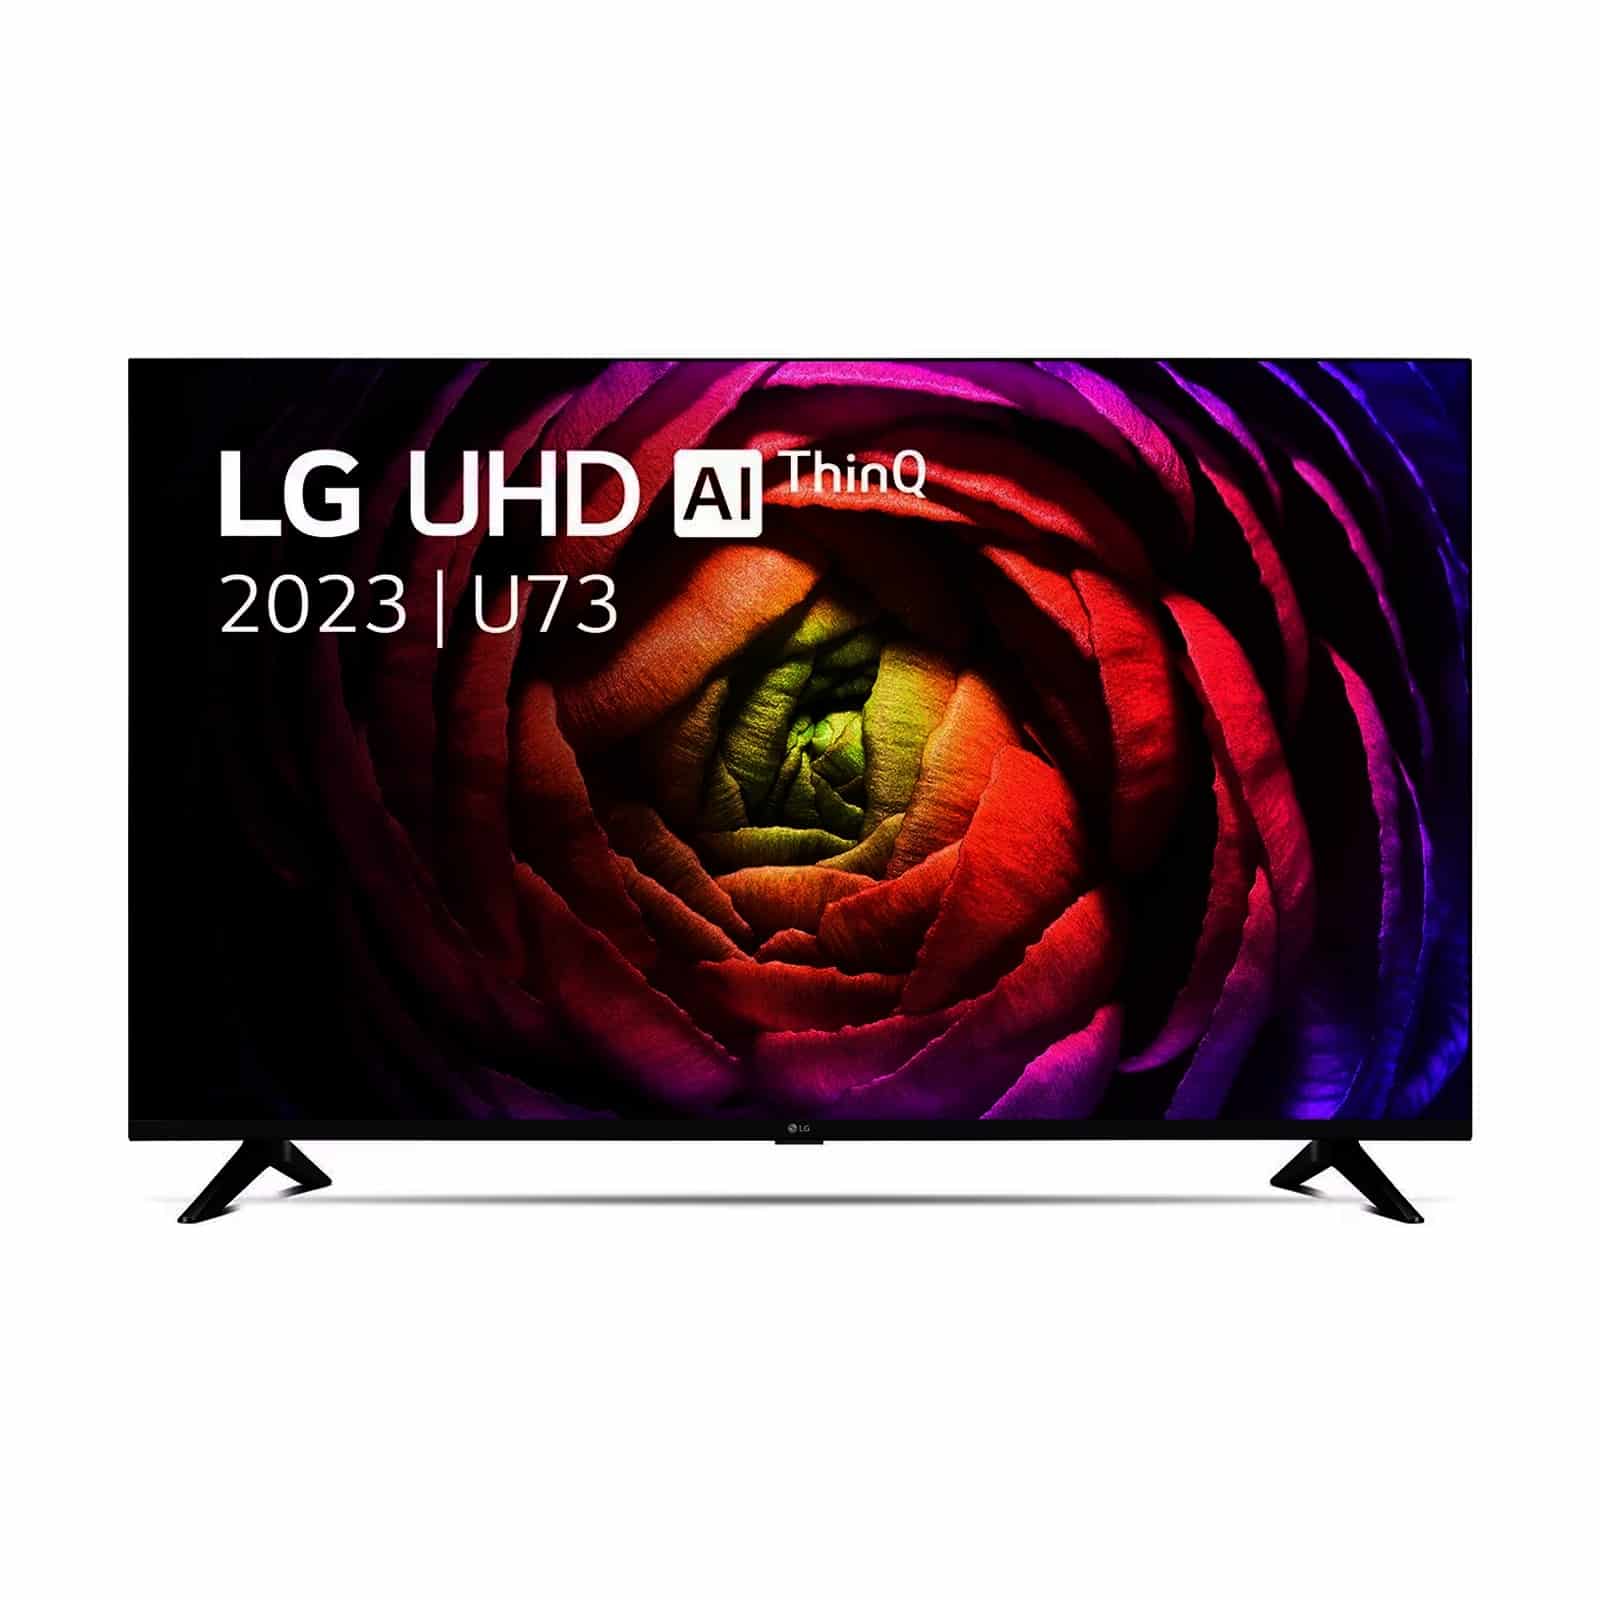 LG 65 Inch UR73 Series UHD 4K Smart TV